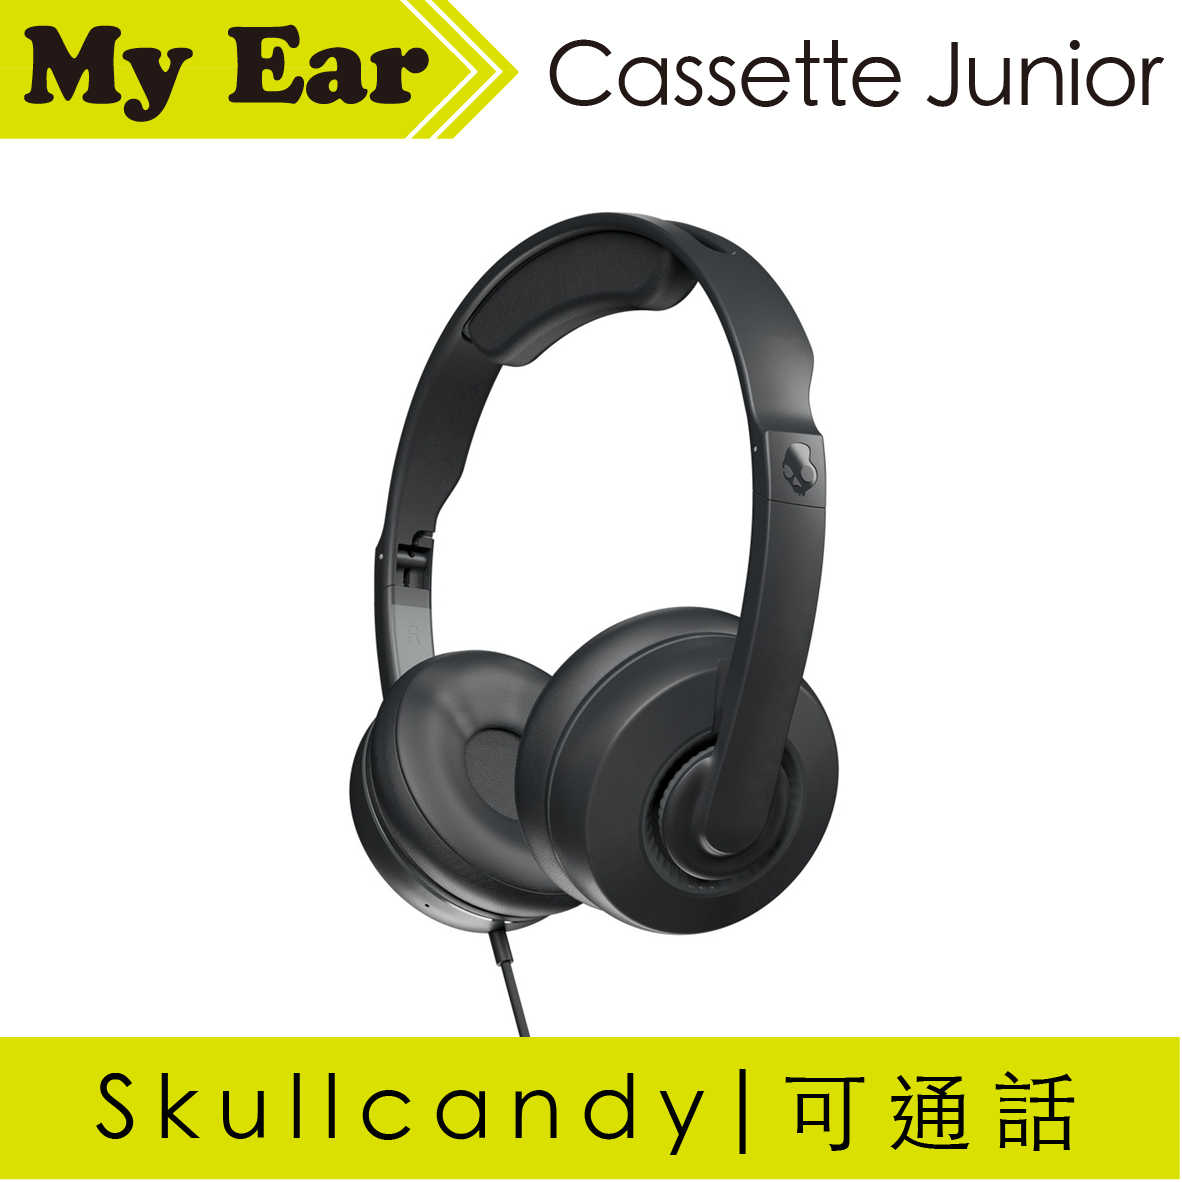 Skullcandy 骷髏糖 Cassette Junior 黑 有線 耳罩式 耳機 | My Ear 耳機專門店